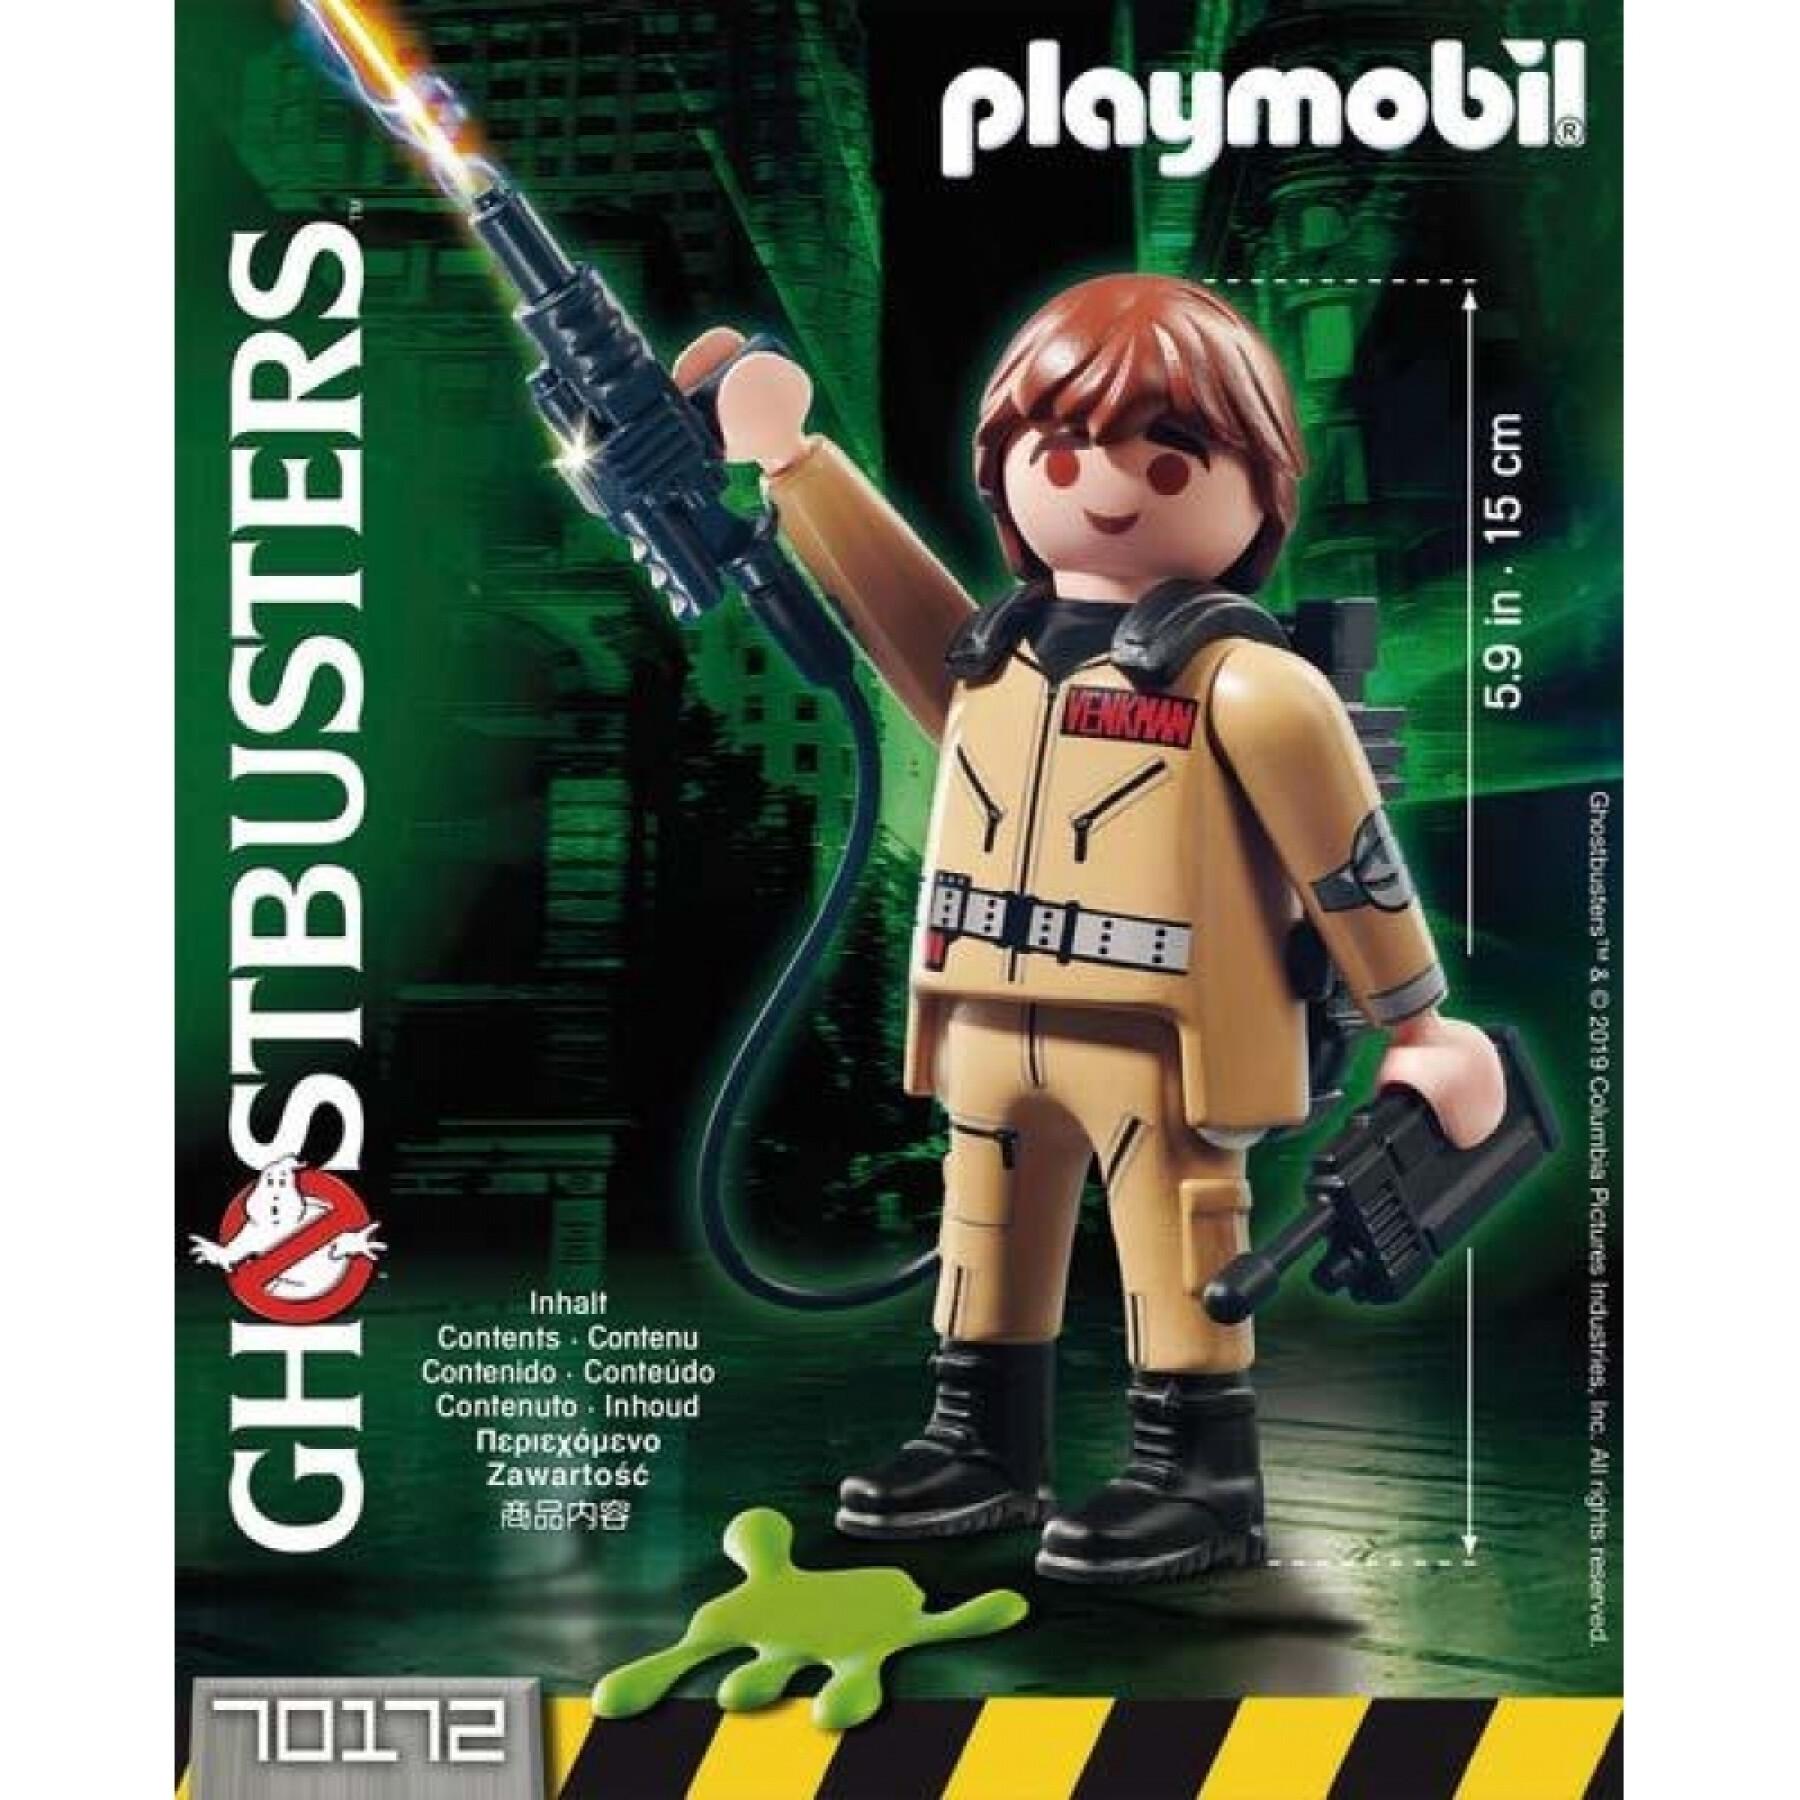 Figurine Ghostbusters PV Playmobil